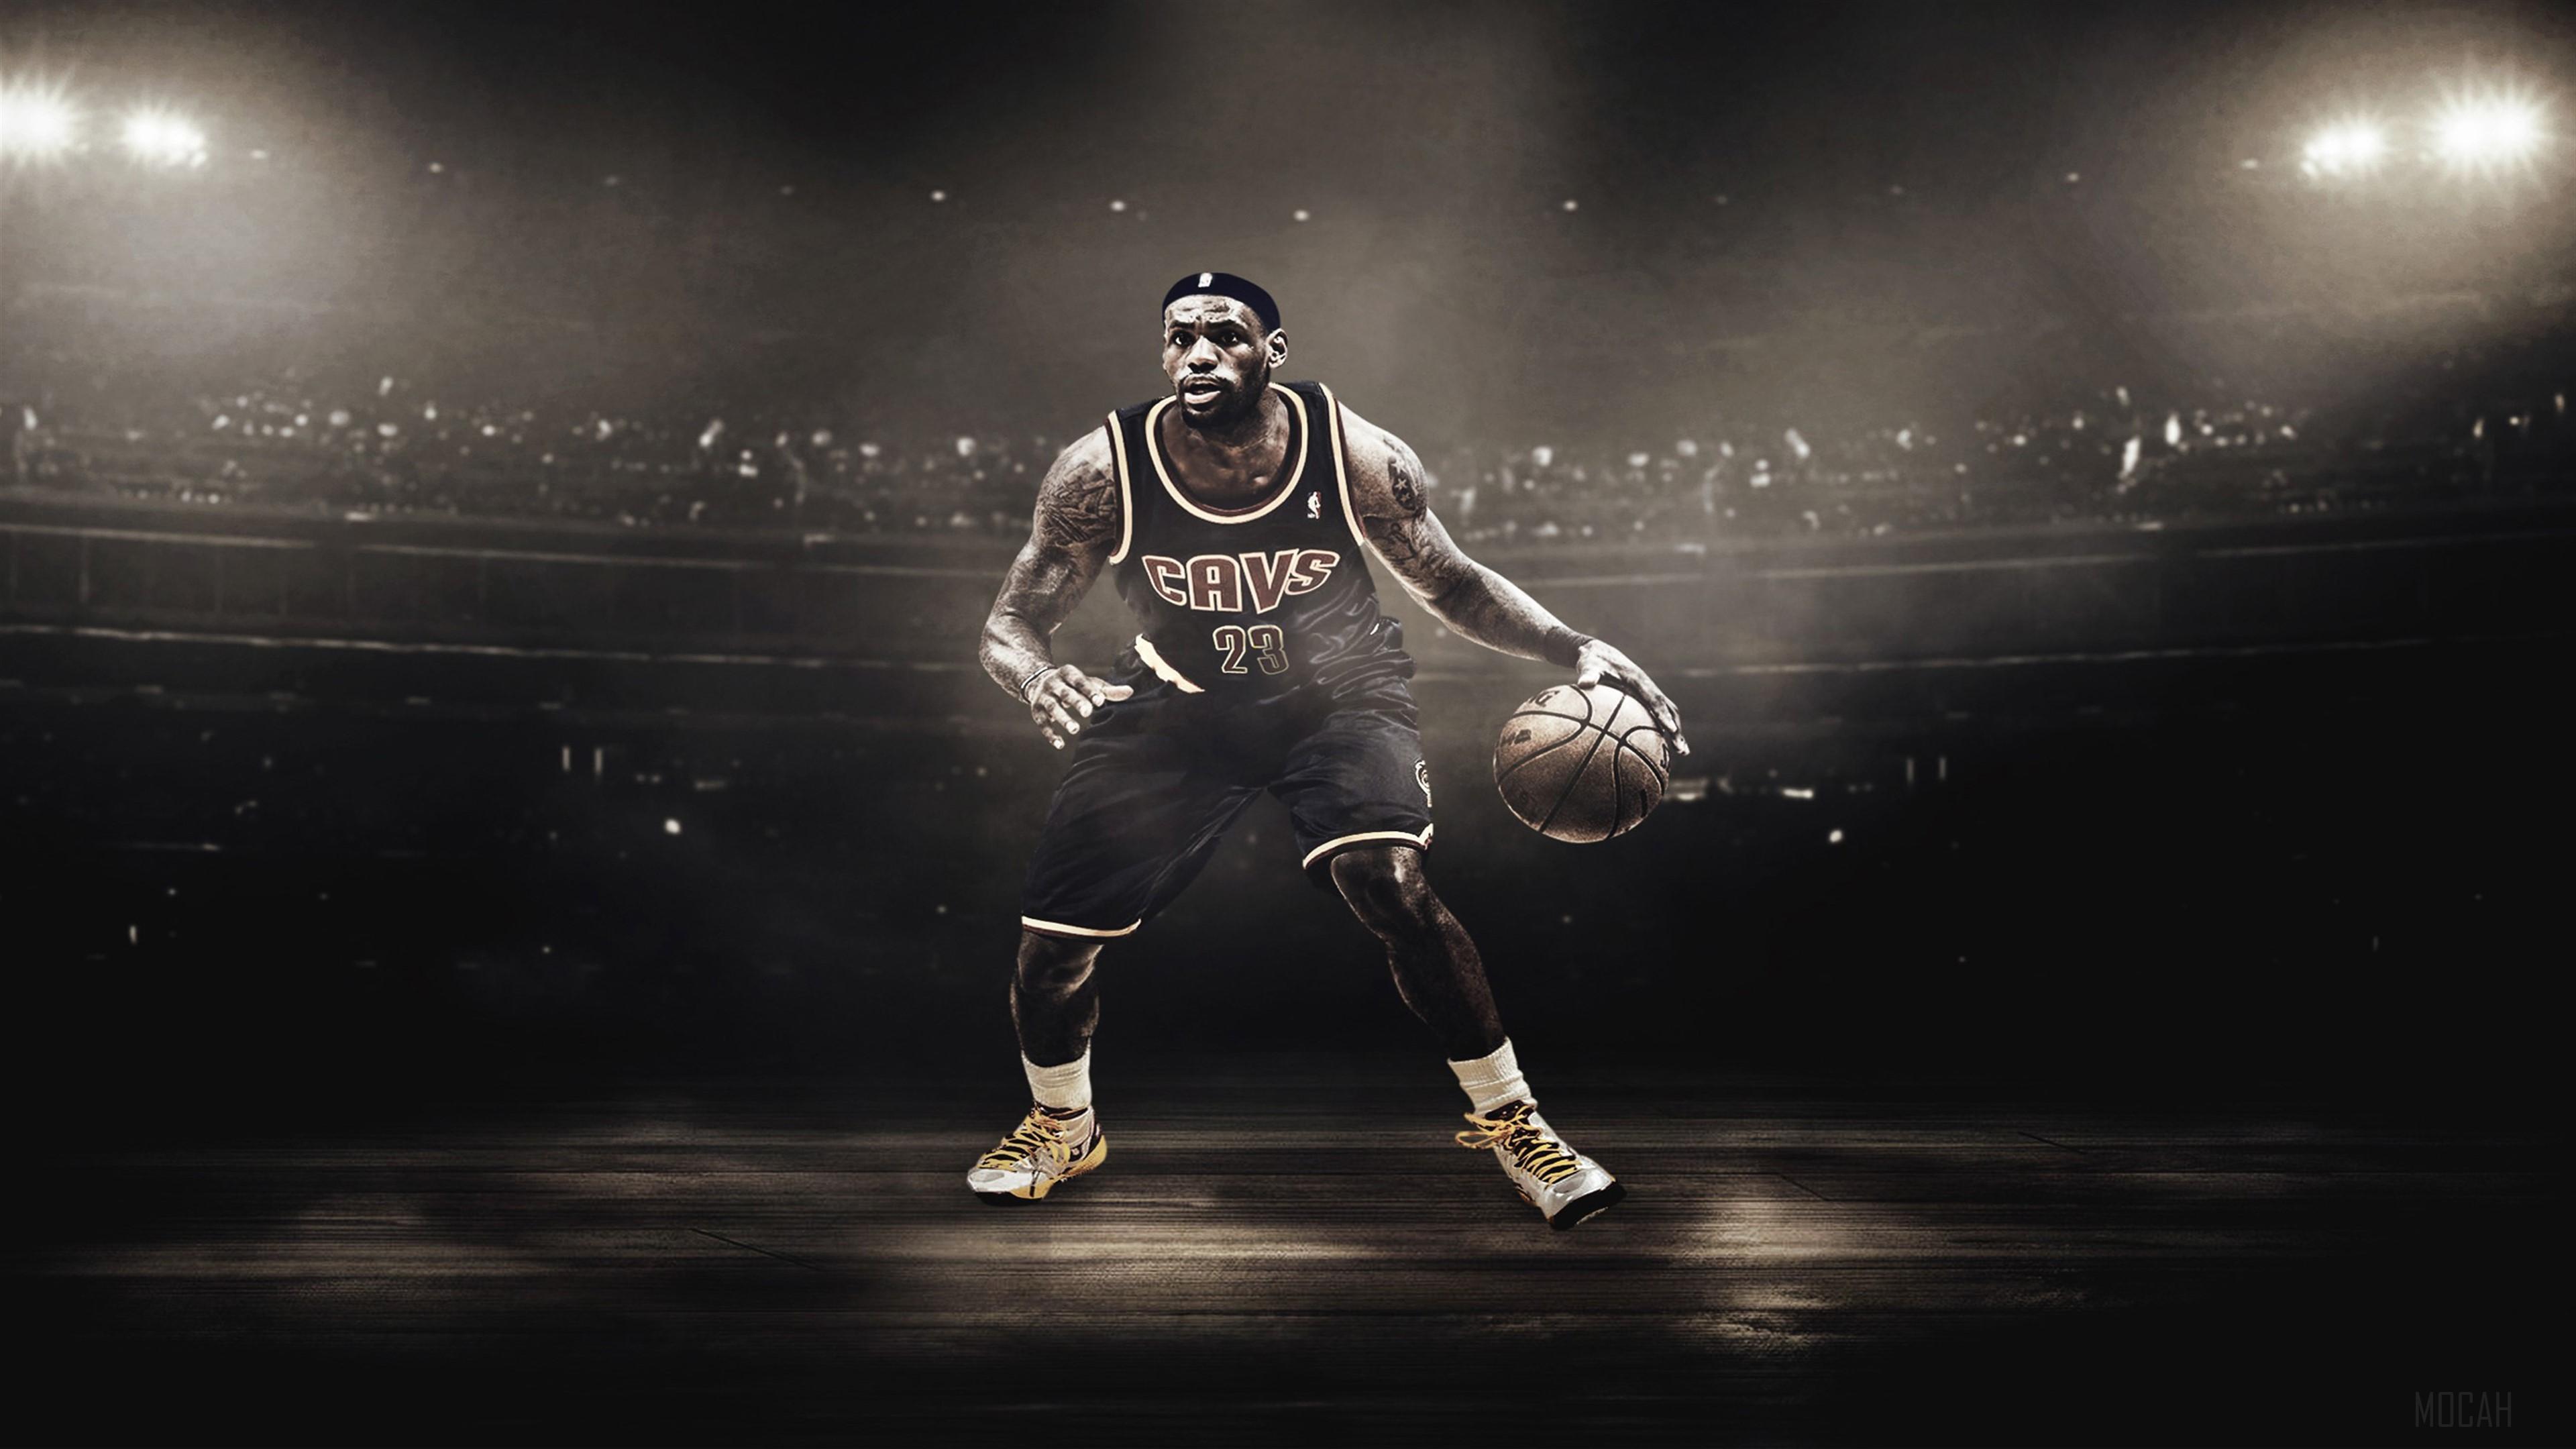 HD wallpaper, Lebron James Basketball Player 4K